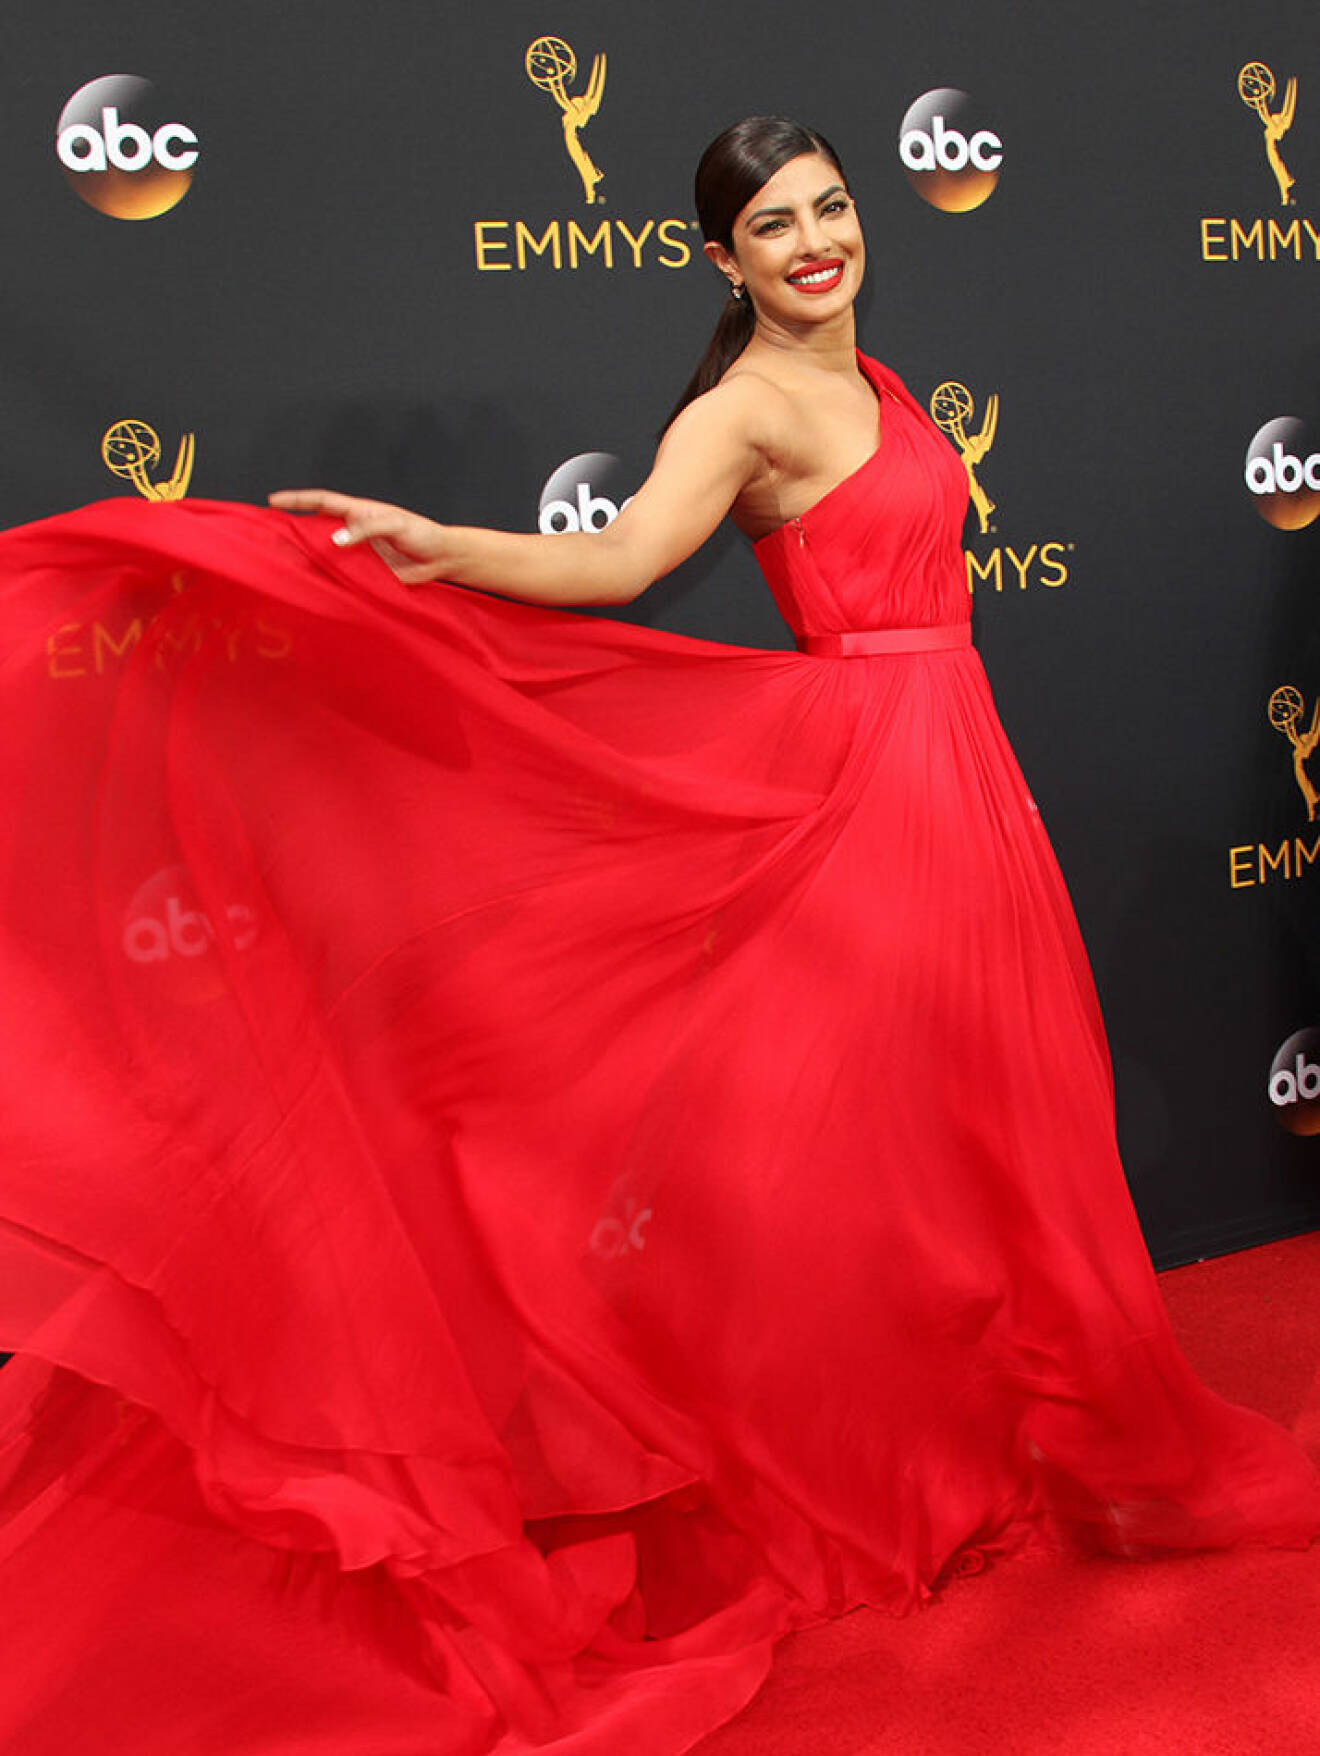 68th Emmy Awards Arrivals 2016 held at the Microsoft Theater Featuring: Priyanka Chopra Where: Los Angeles, California, United States When: 18 Sep 2016 Credit: Adriana M. Barraza/WENN.com